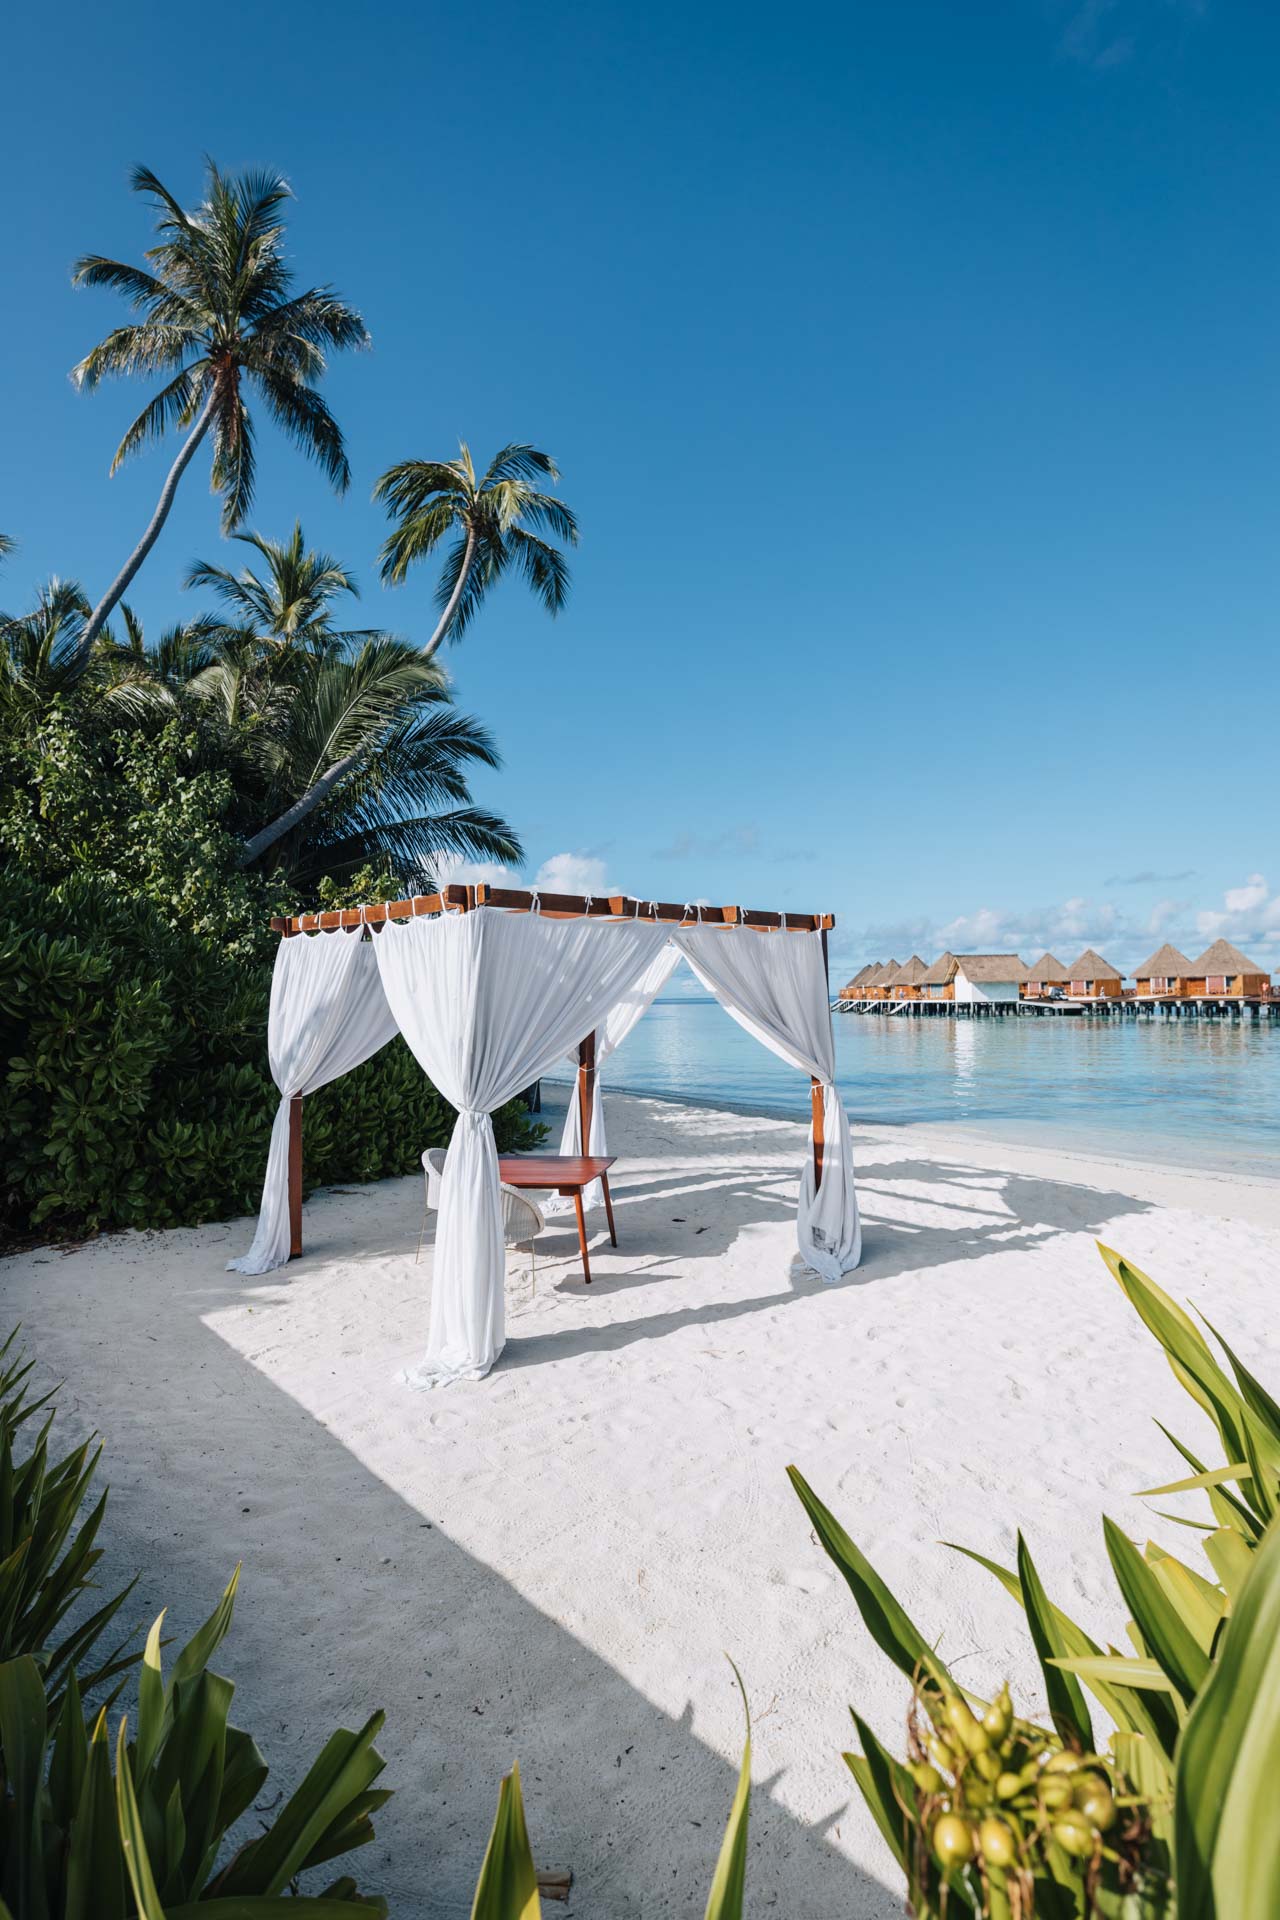 beach pool villas maldives, beach pool villa Maldives, maldives beach villa with pool, maldives beach villa with private pool, beach pool villas in Maldives